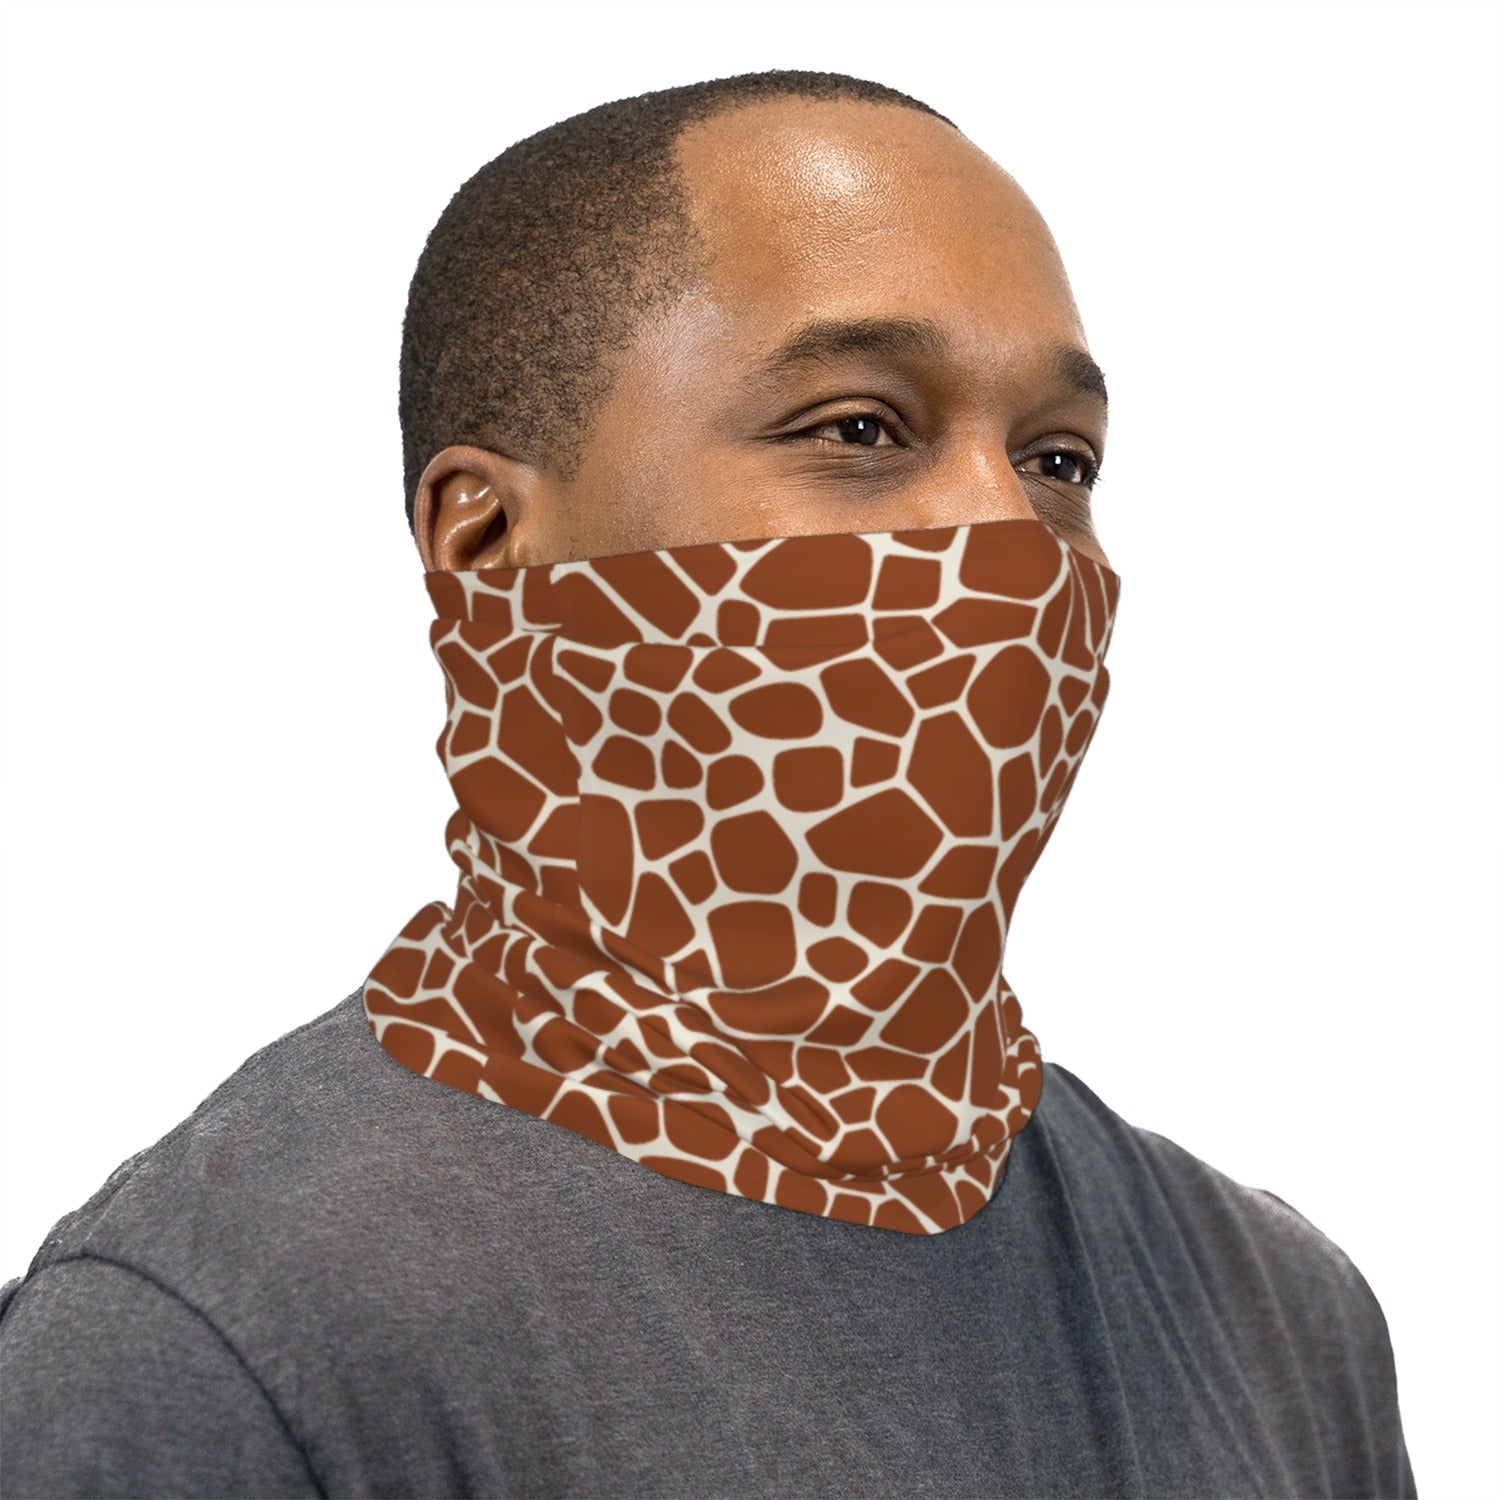 Giraffe Print Neck Gaiter Face Mask